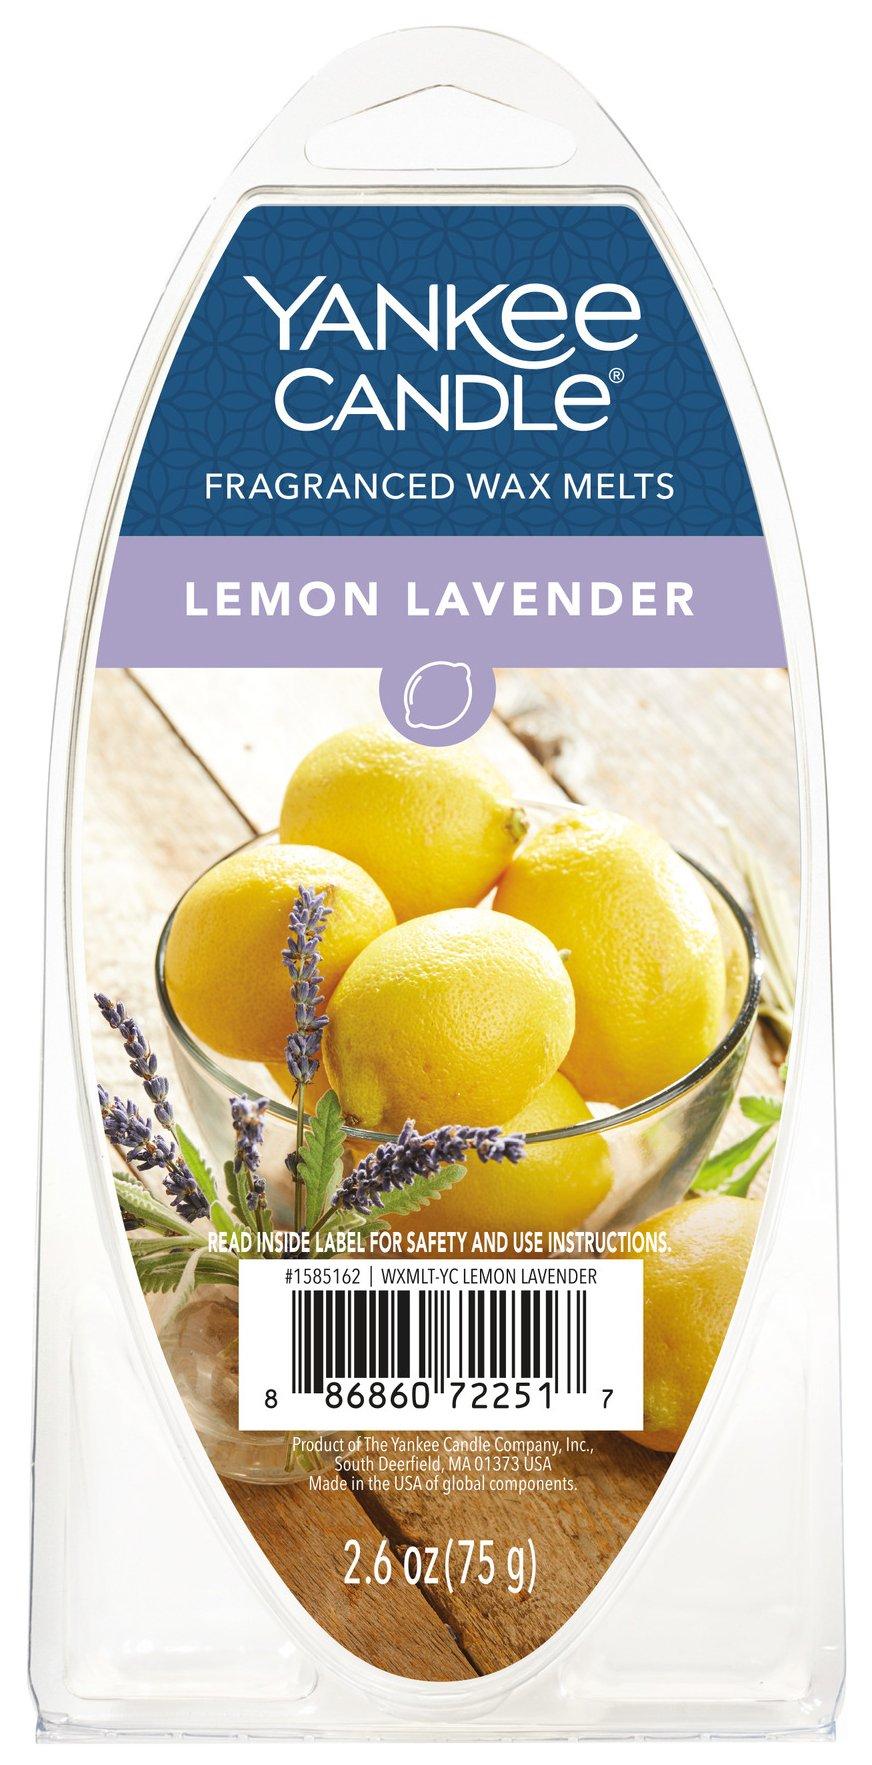 Yankee Candle 6pk Lemon Lavender Wax Melts